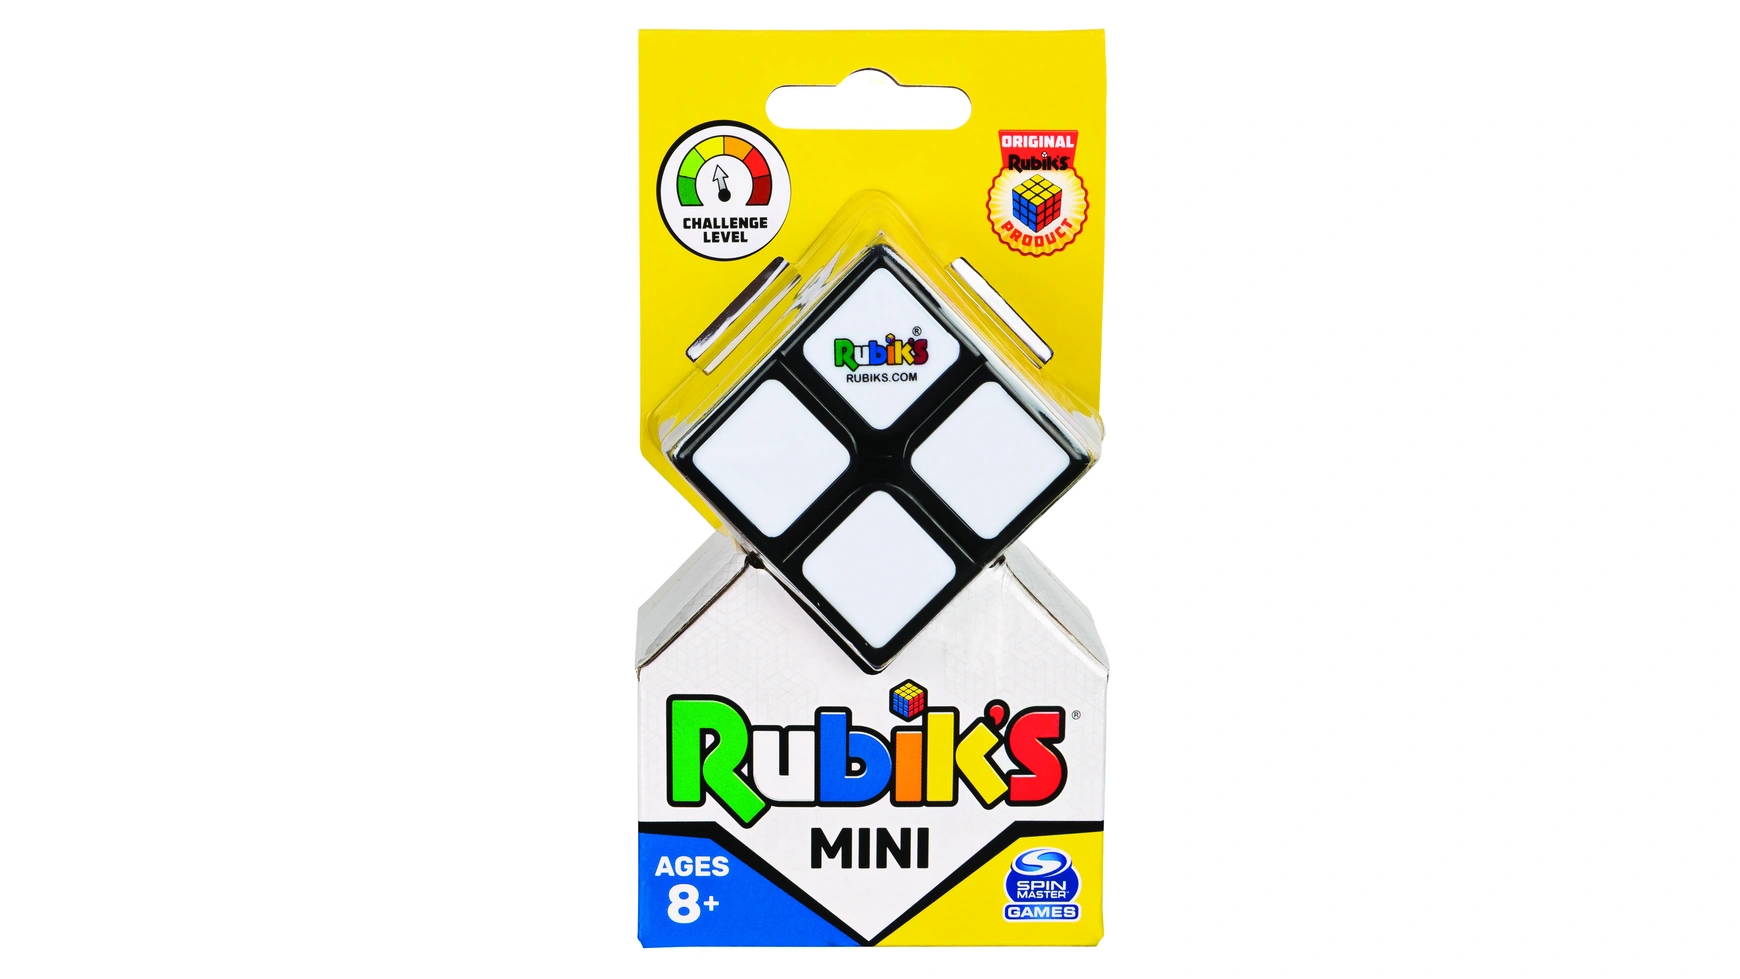 Rubik's Mini 2x2 Кубик Рубика кубик 2x2 для начинающих от 8 лет и для путешествий Spin Master кубик рубика shengshou 14x14 pillowed